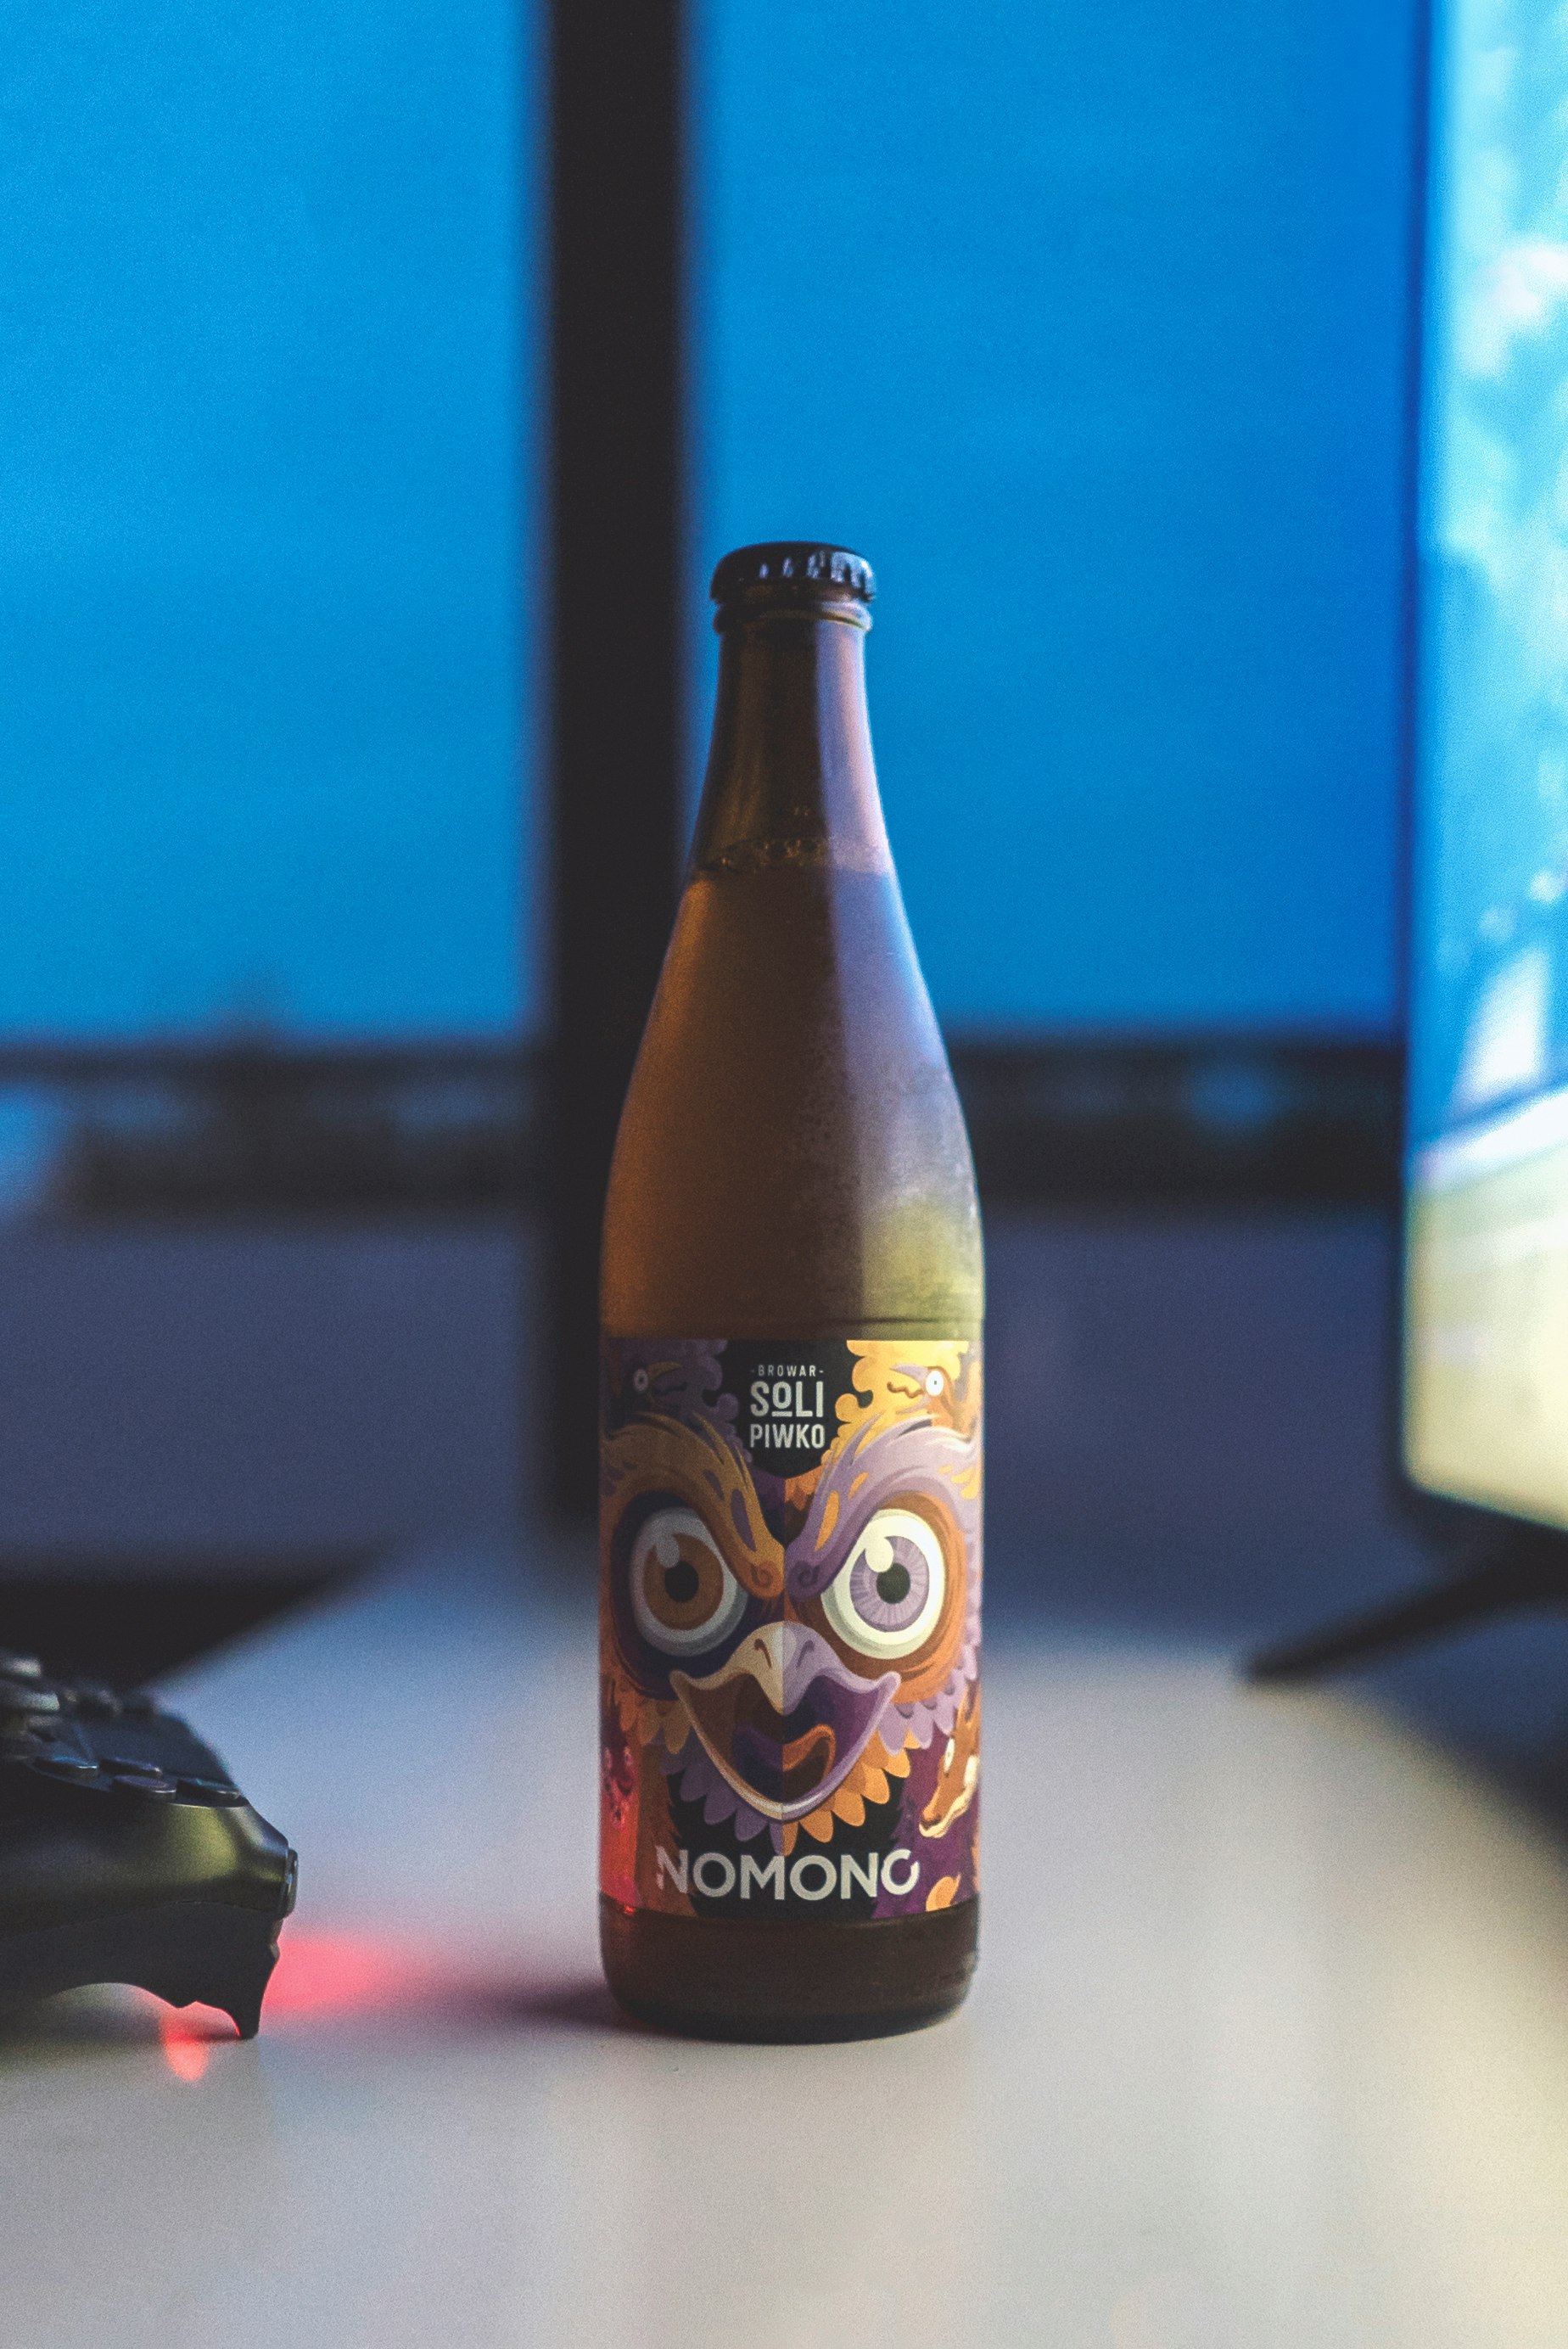 tilt-shift lens photography of Nomono beer bottle in-front of a flat screen TV